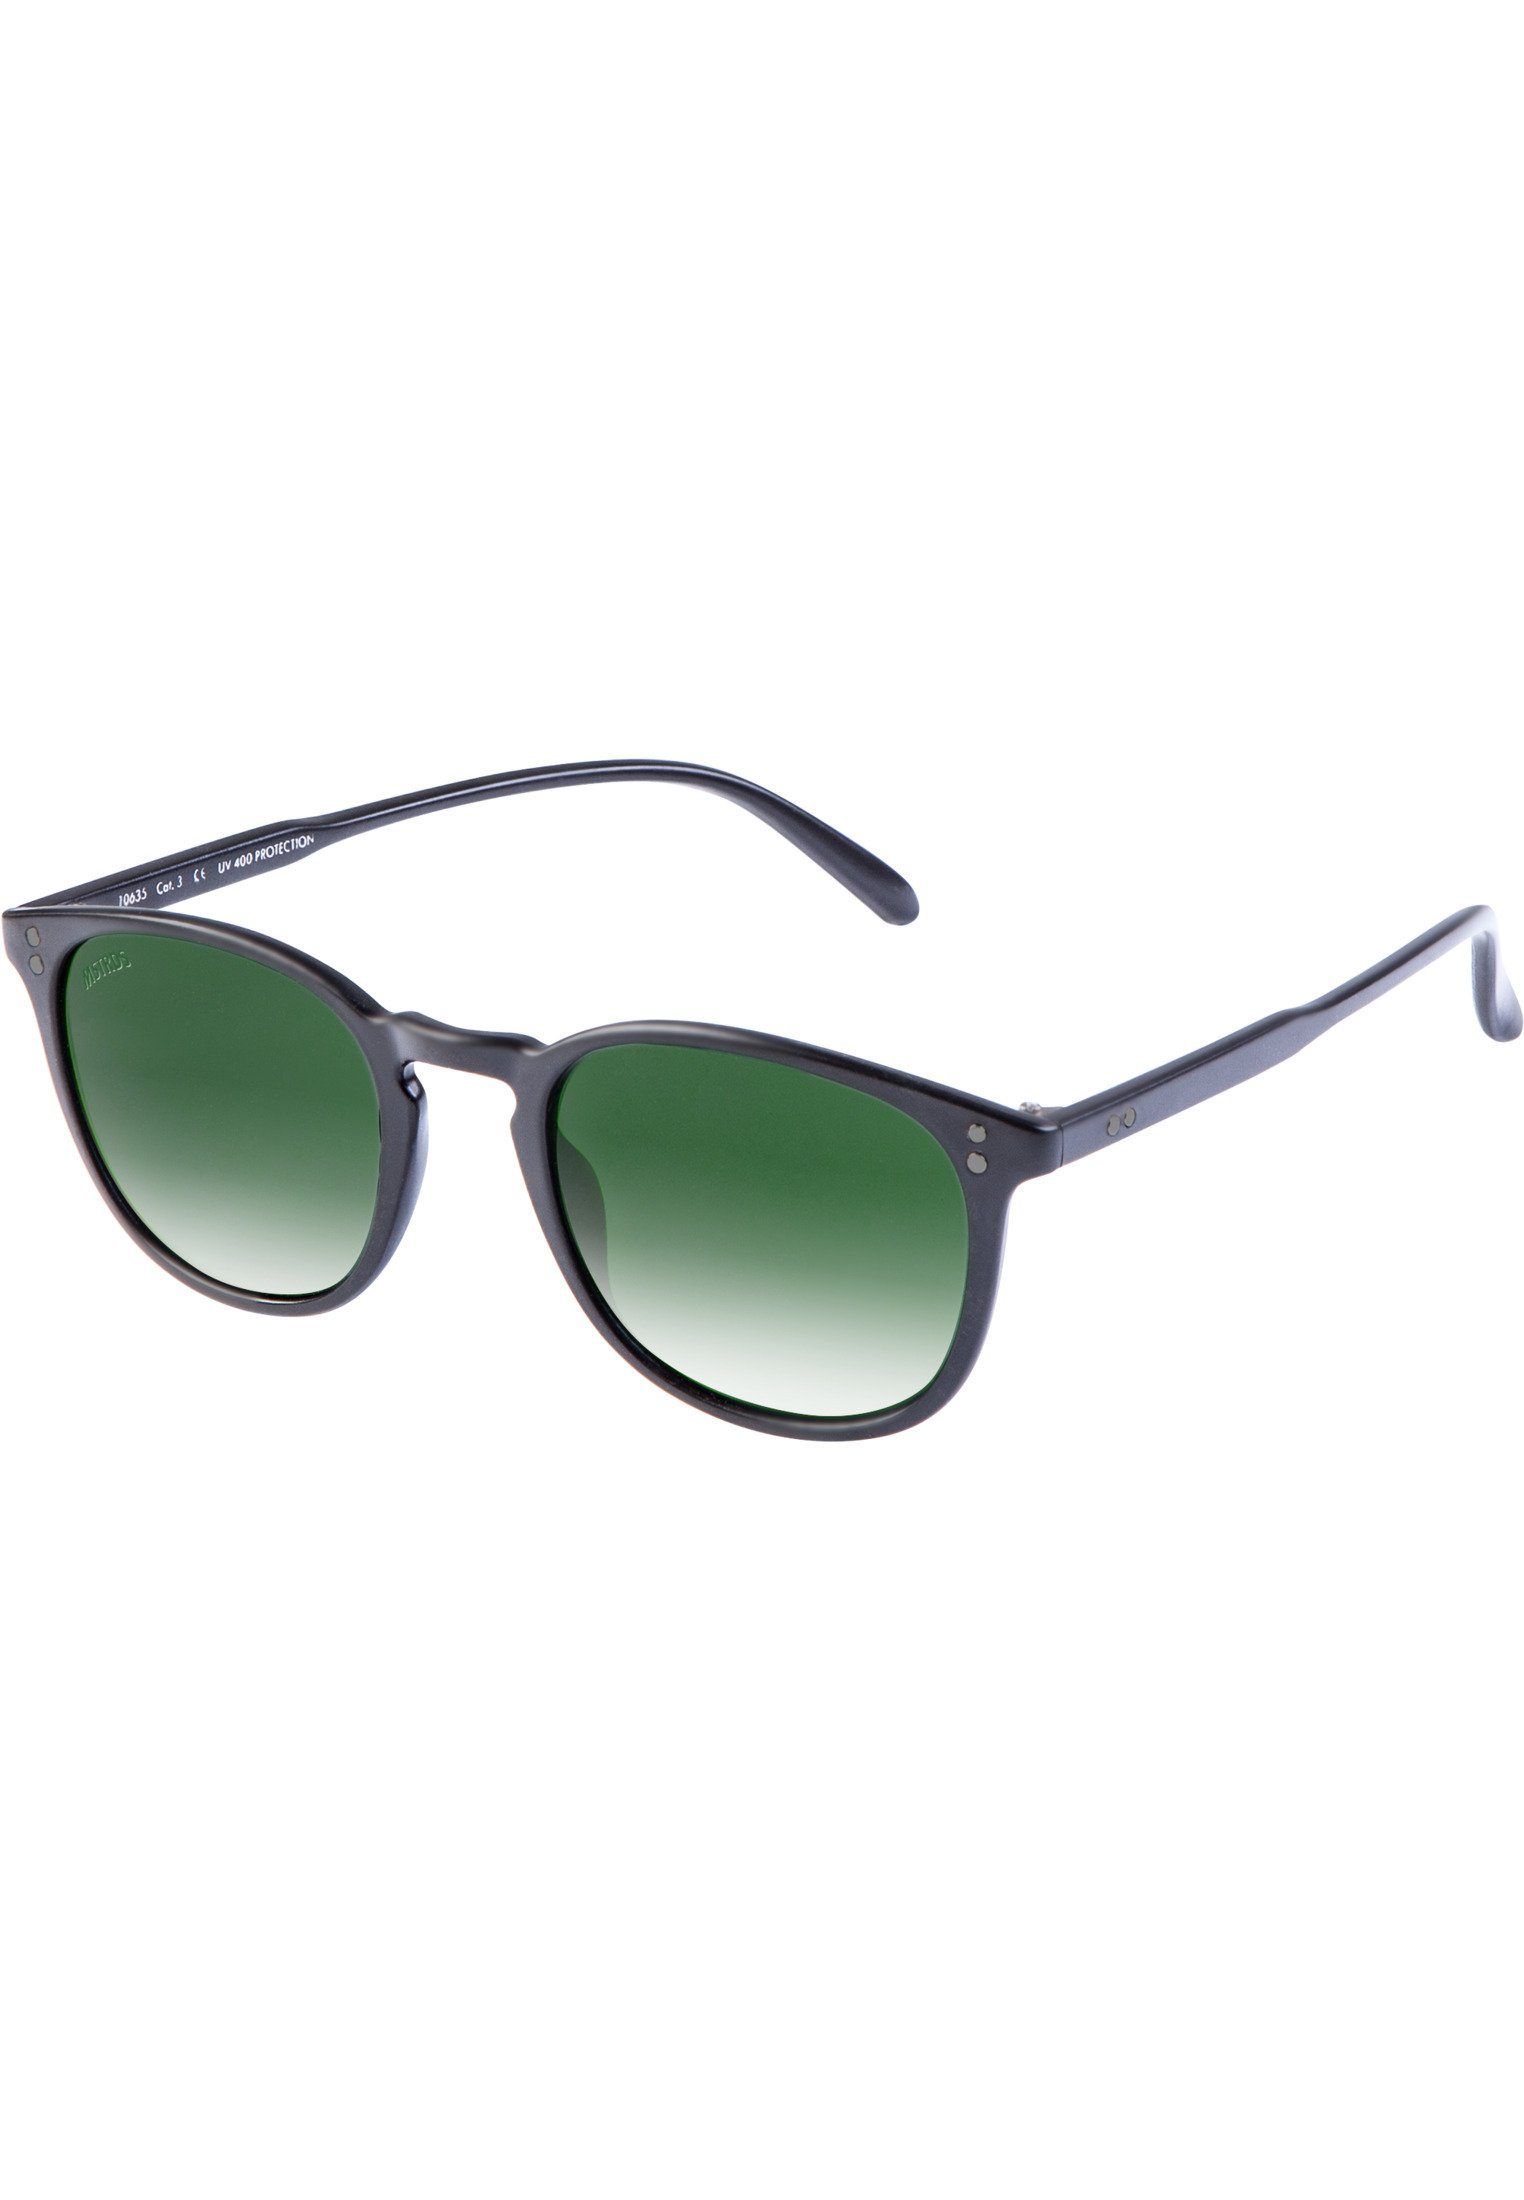 Sunglasses Youth Arthur blk/grn Accessoires Sonnenbrille MSTRDS